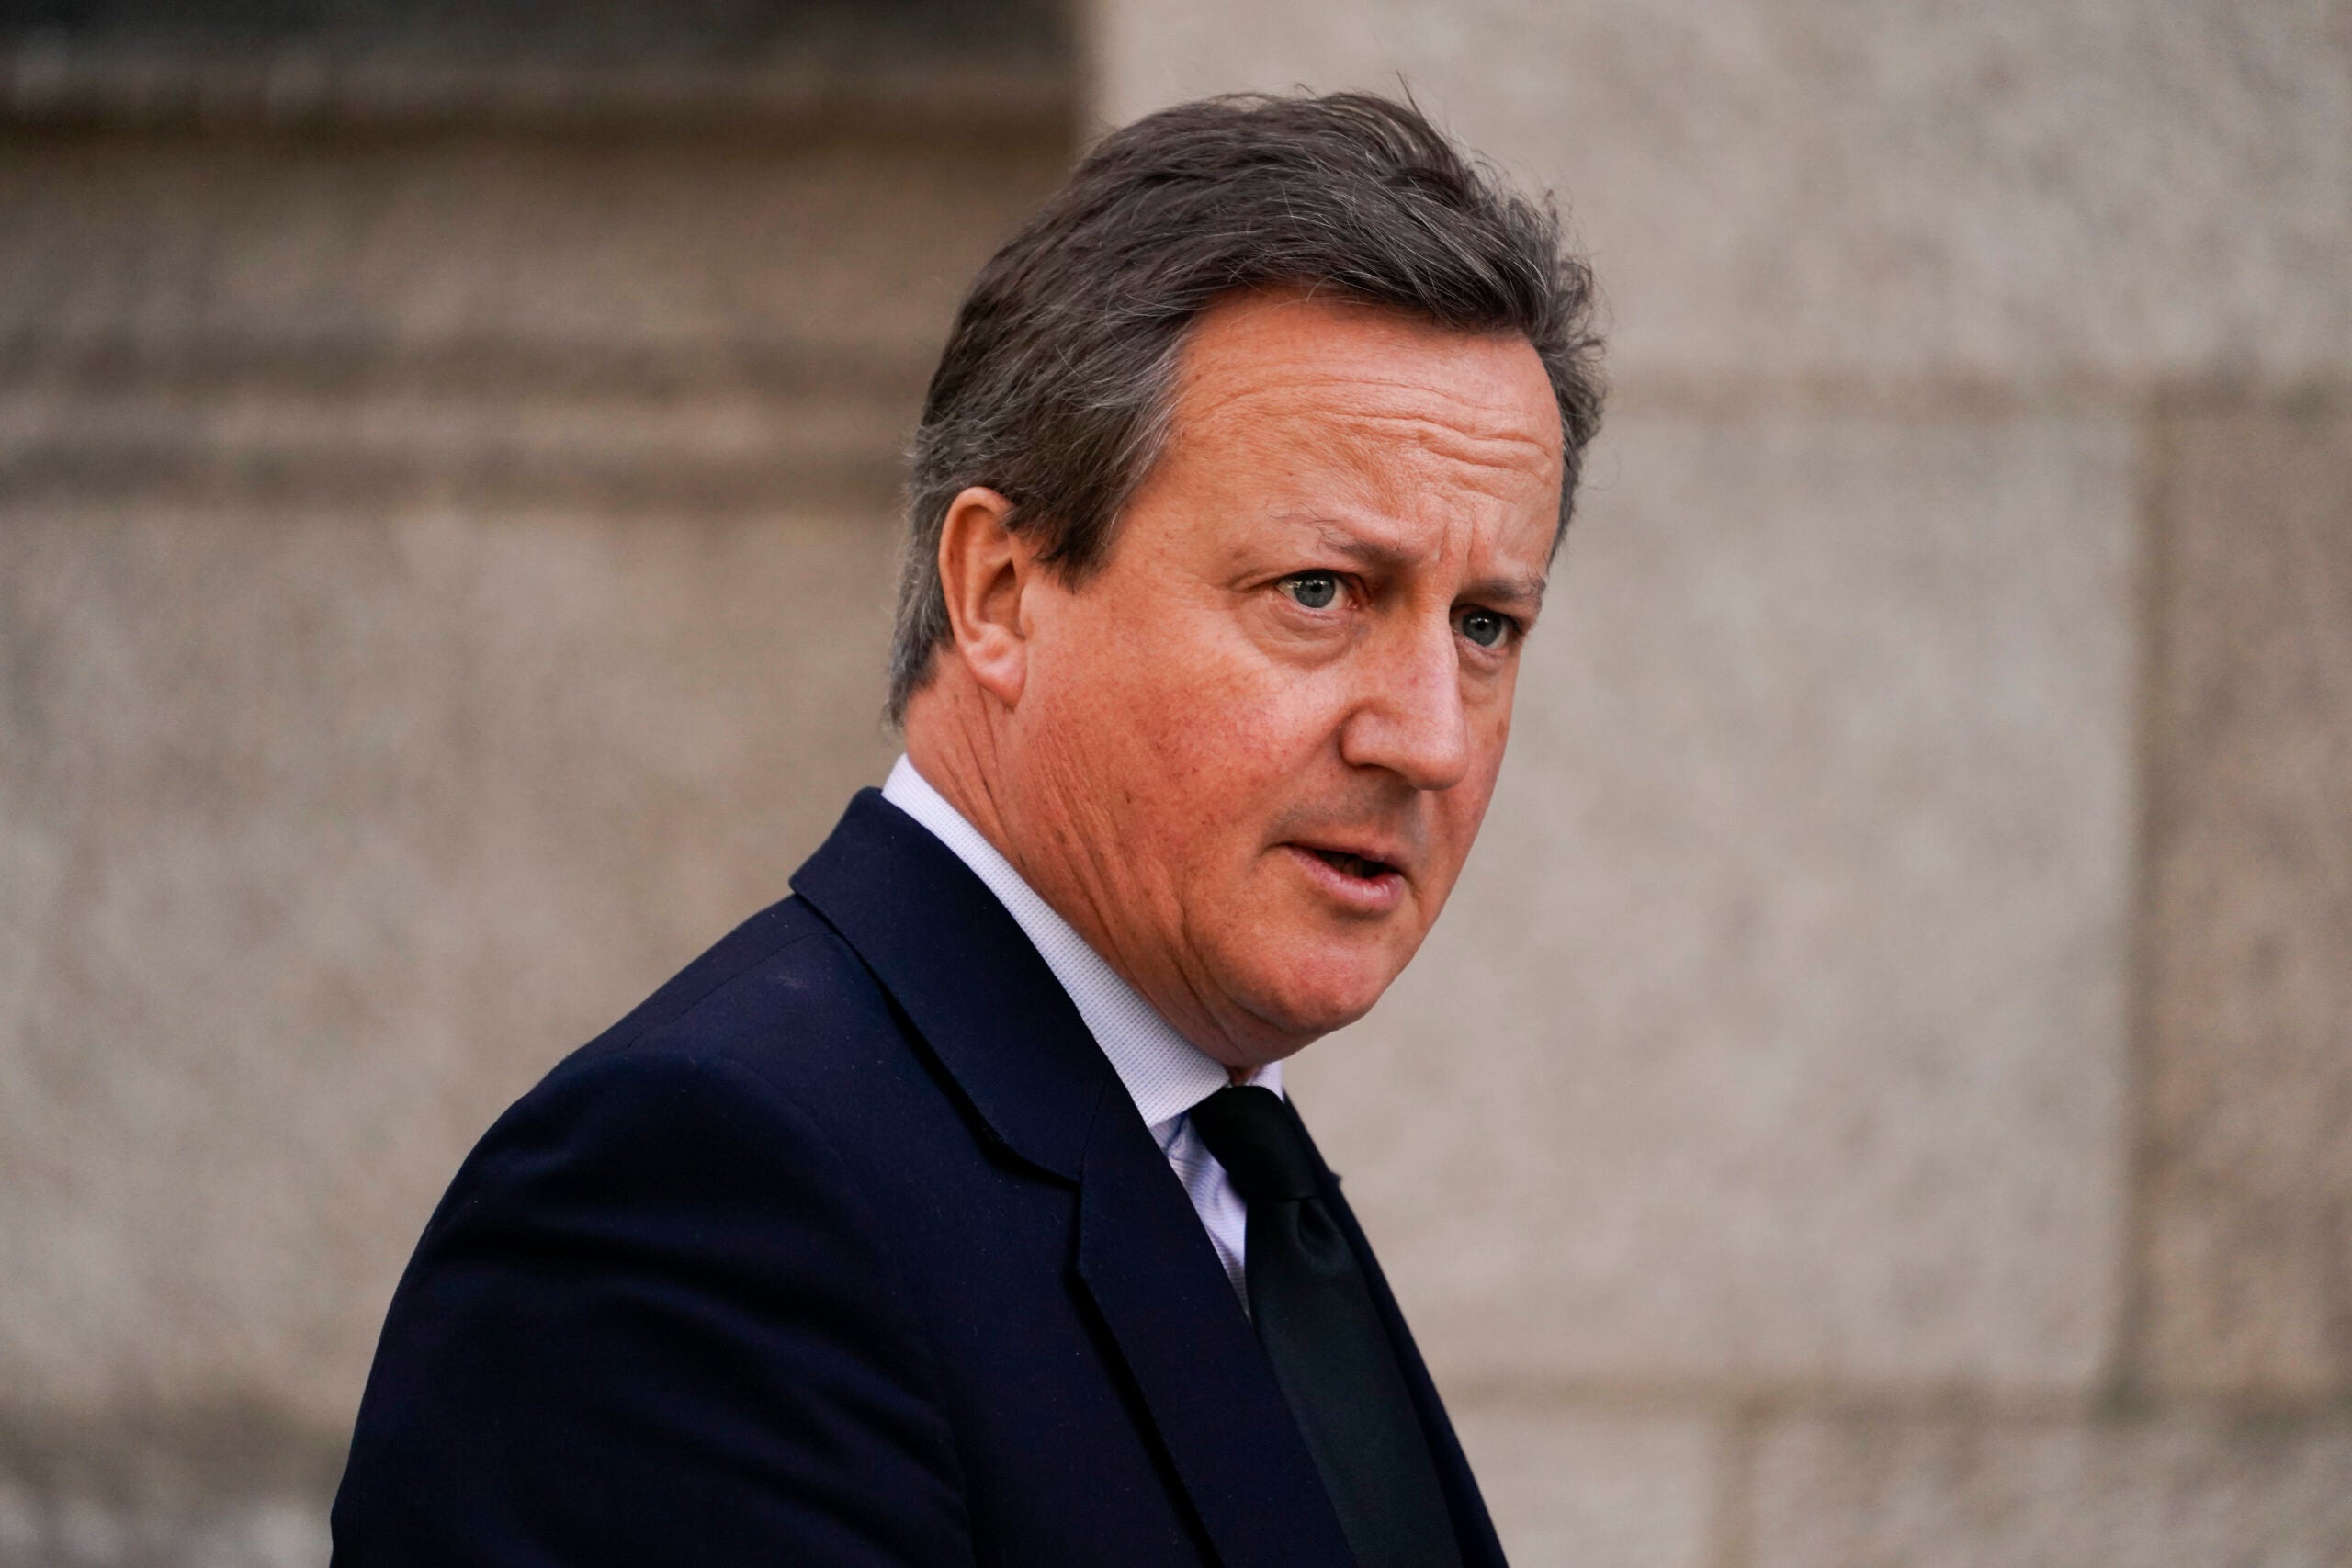 Ex-Prime Minister David Cameron makes shock return to UK government ...